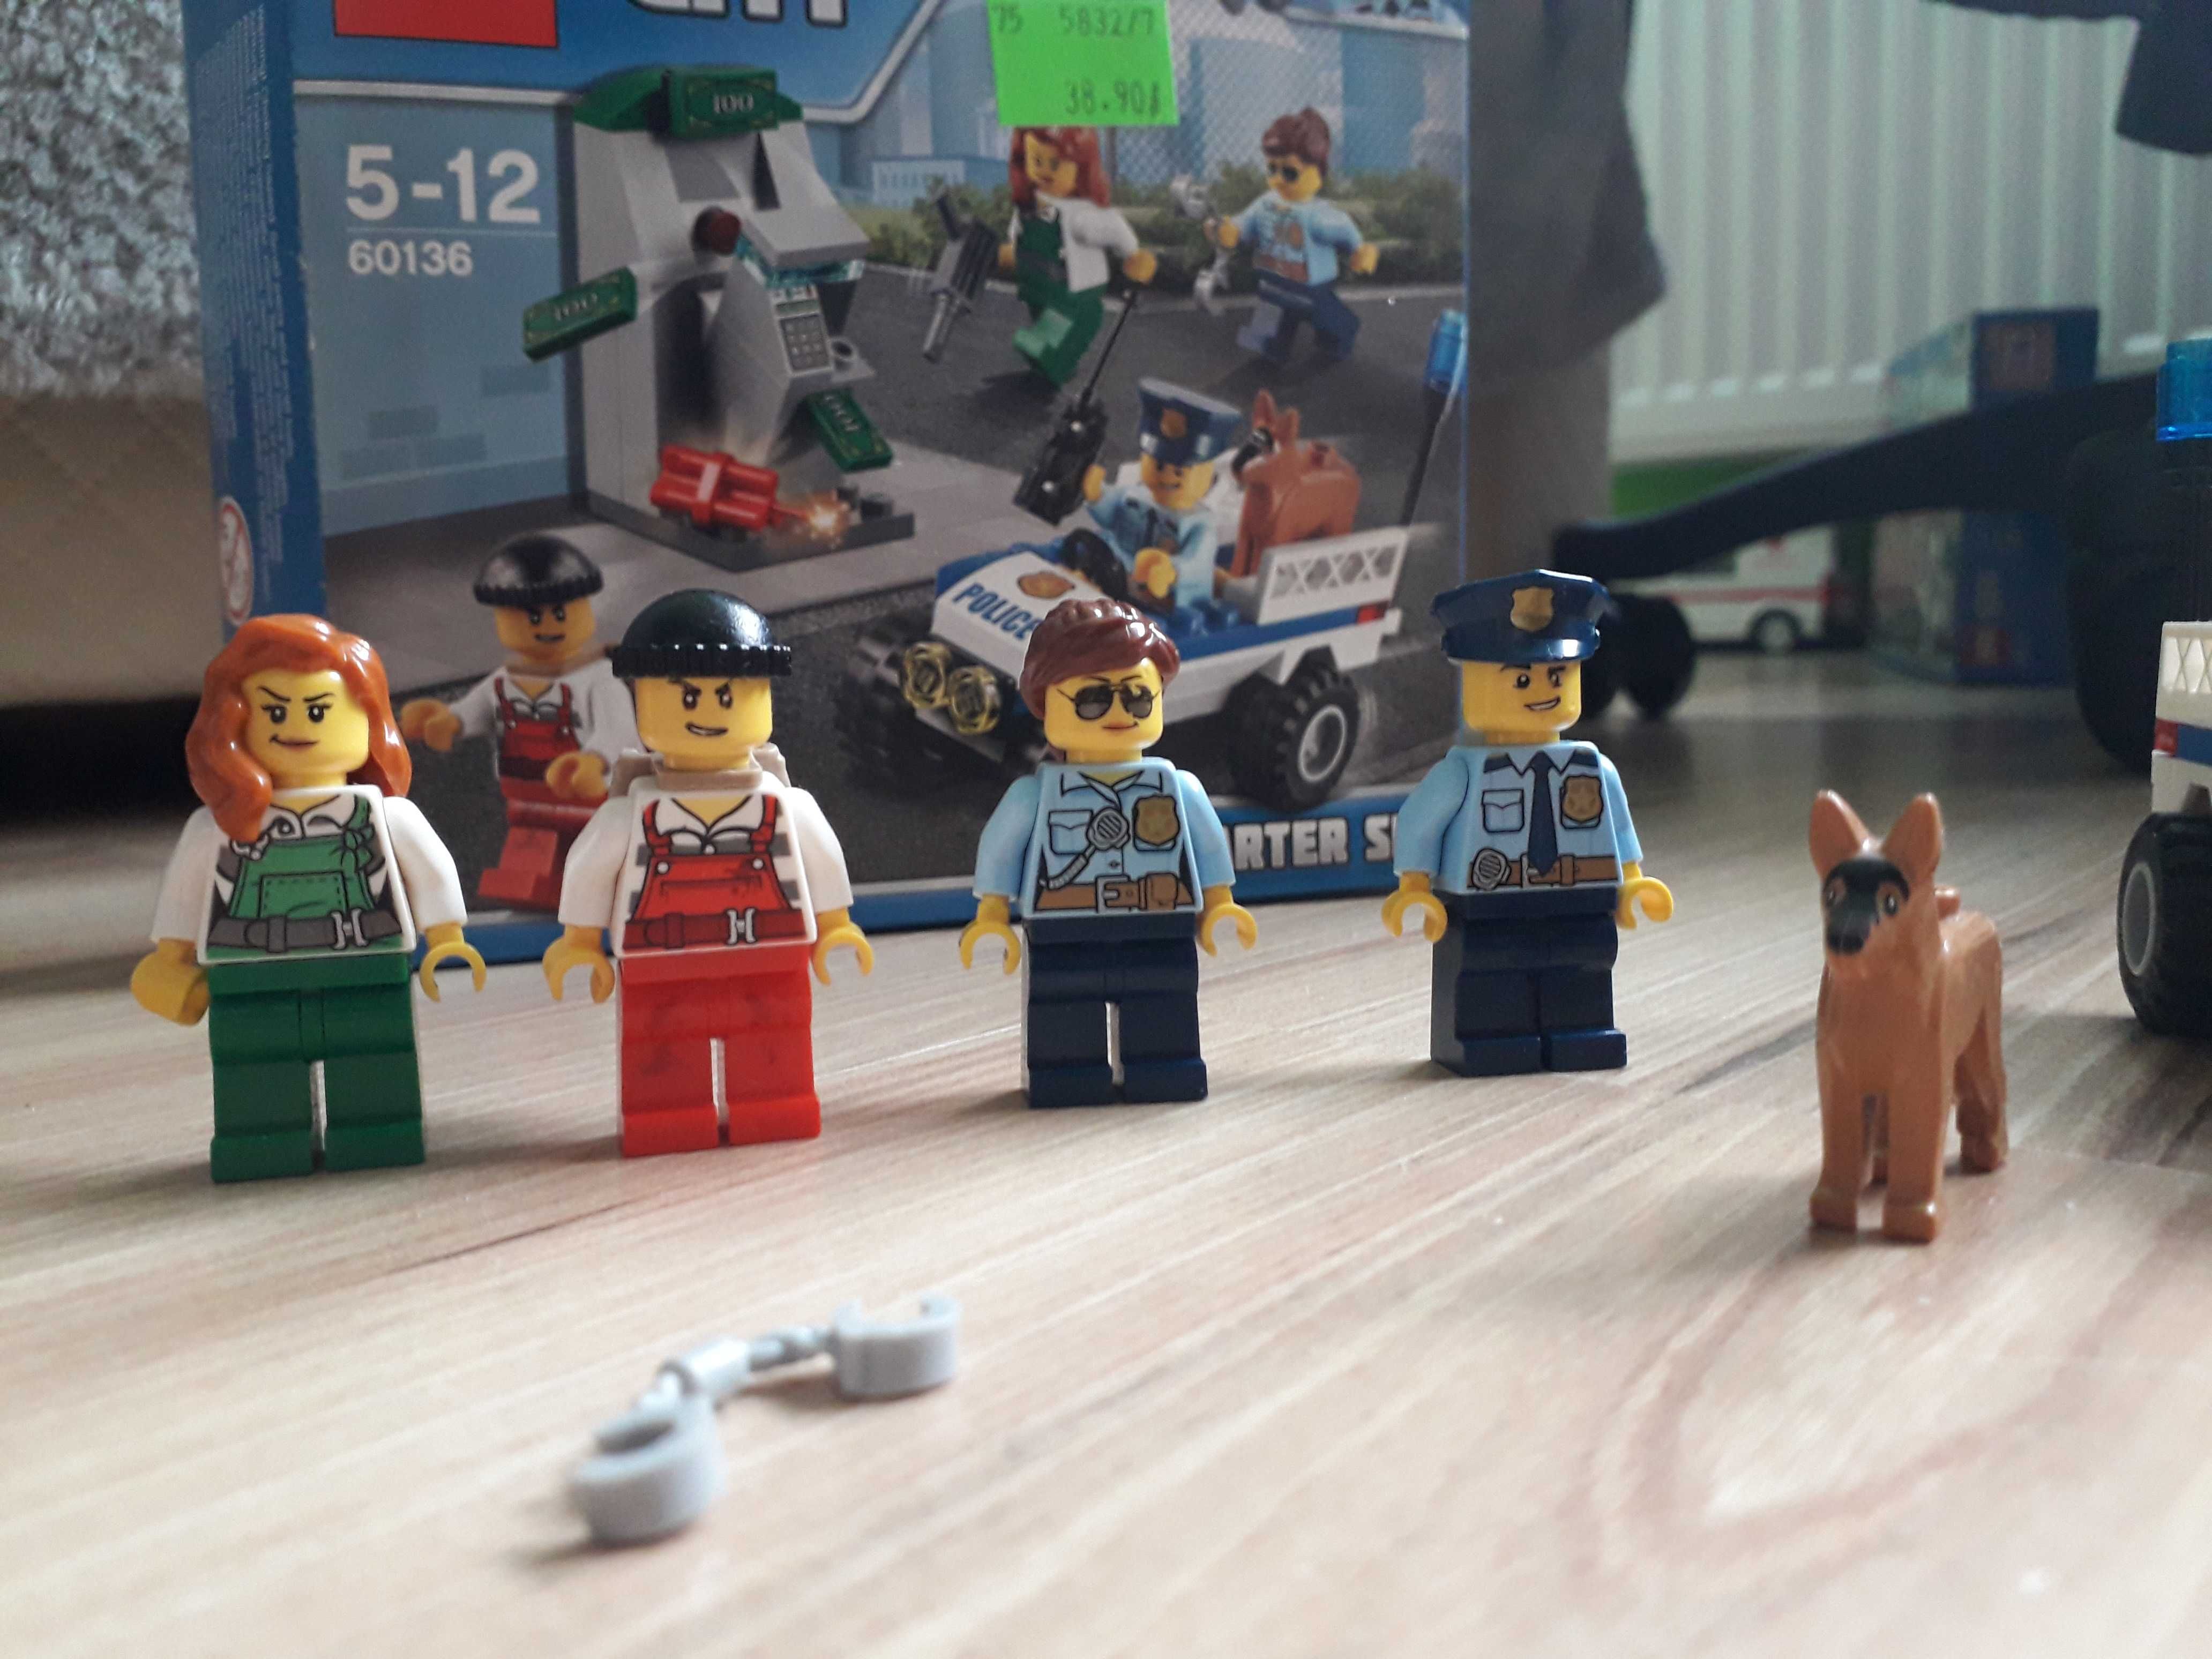 Lego city 60136 Police Starter set.